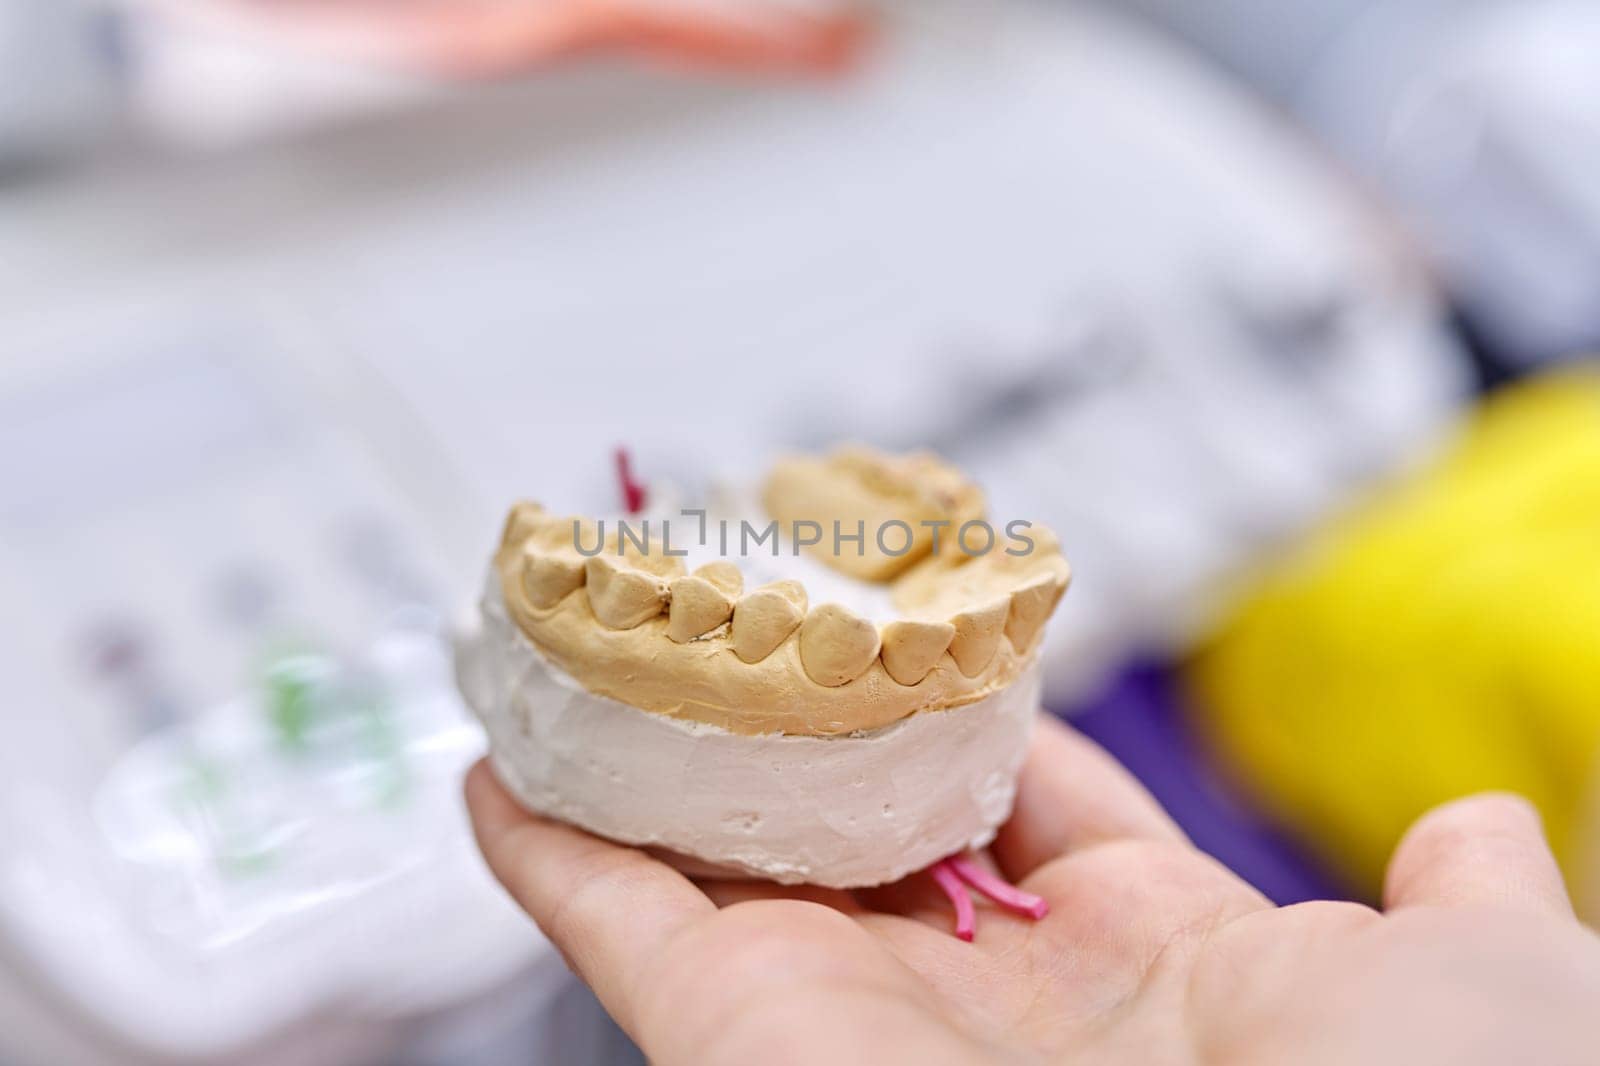 Gypsum model of teeth of jaw, dentist office background, orthopedics prosthetics dentistry concept